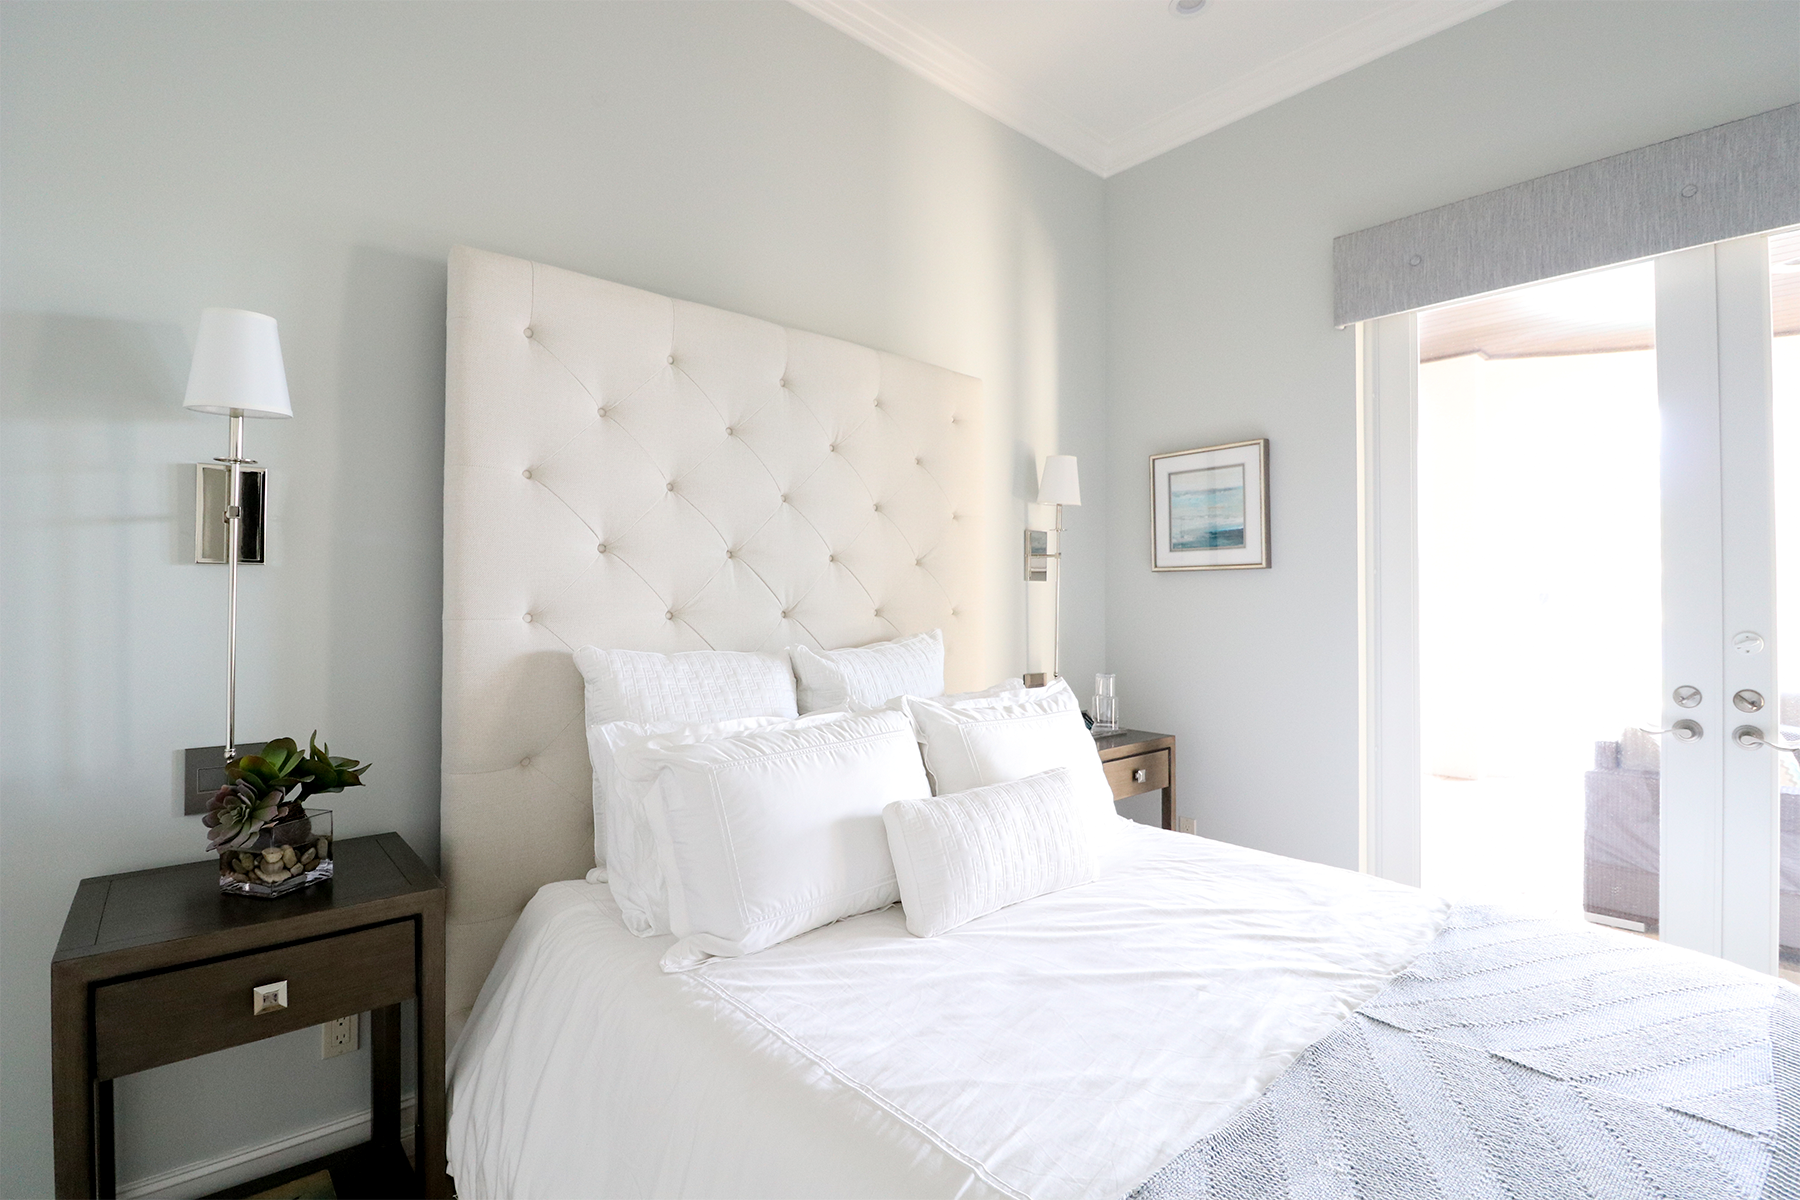 7 Unique Tips to Decor Your Miami Style Bedroom